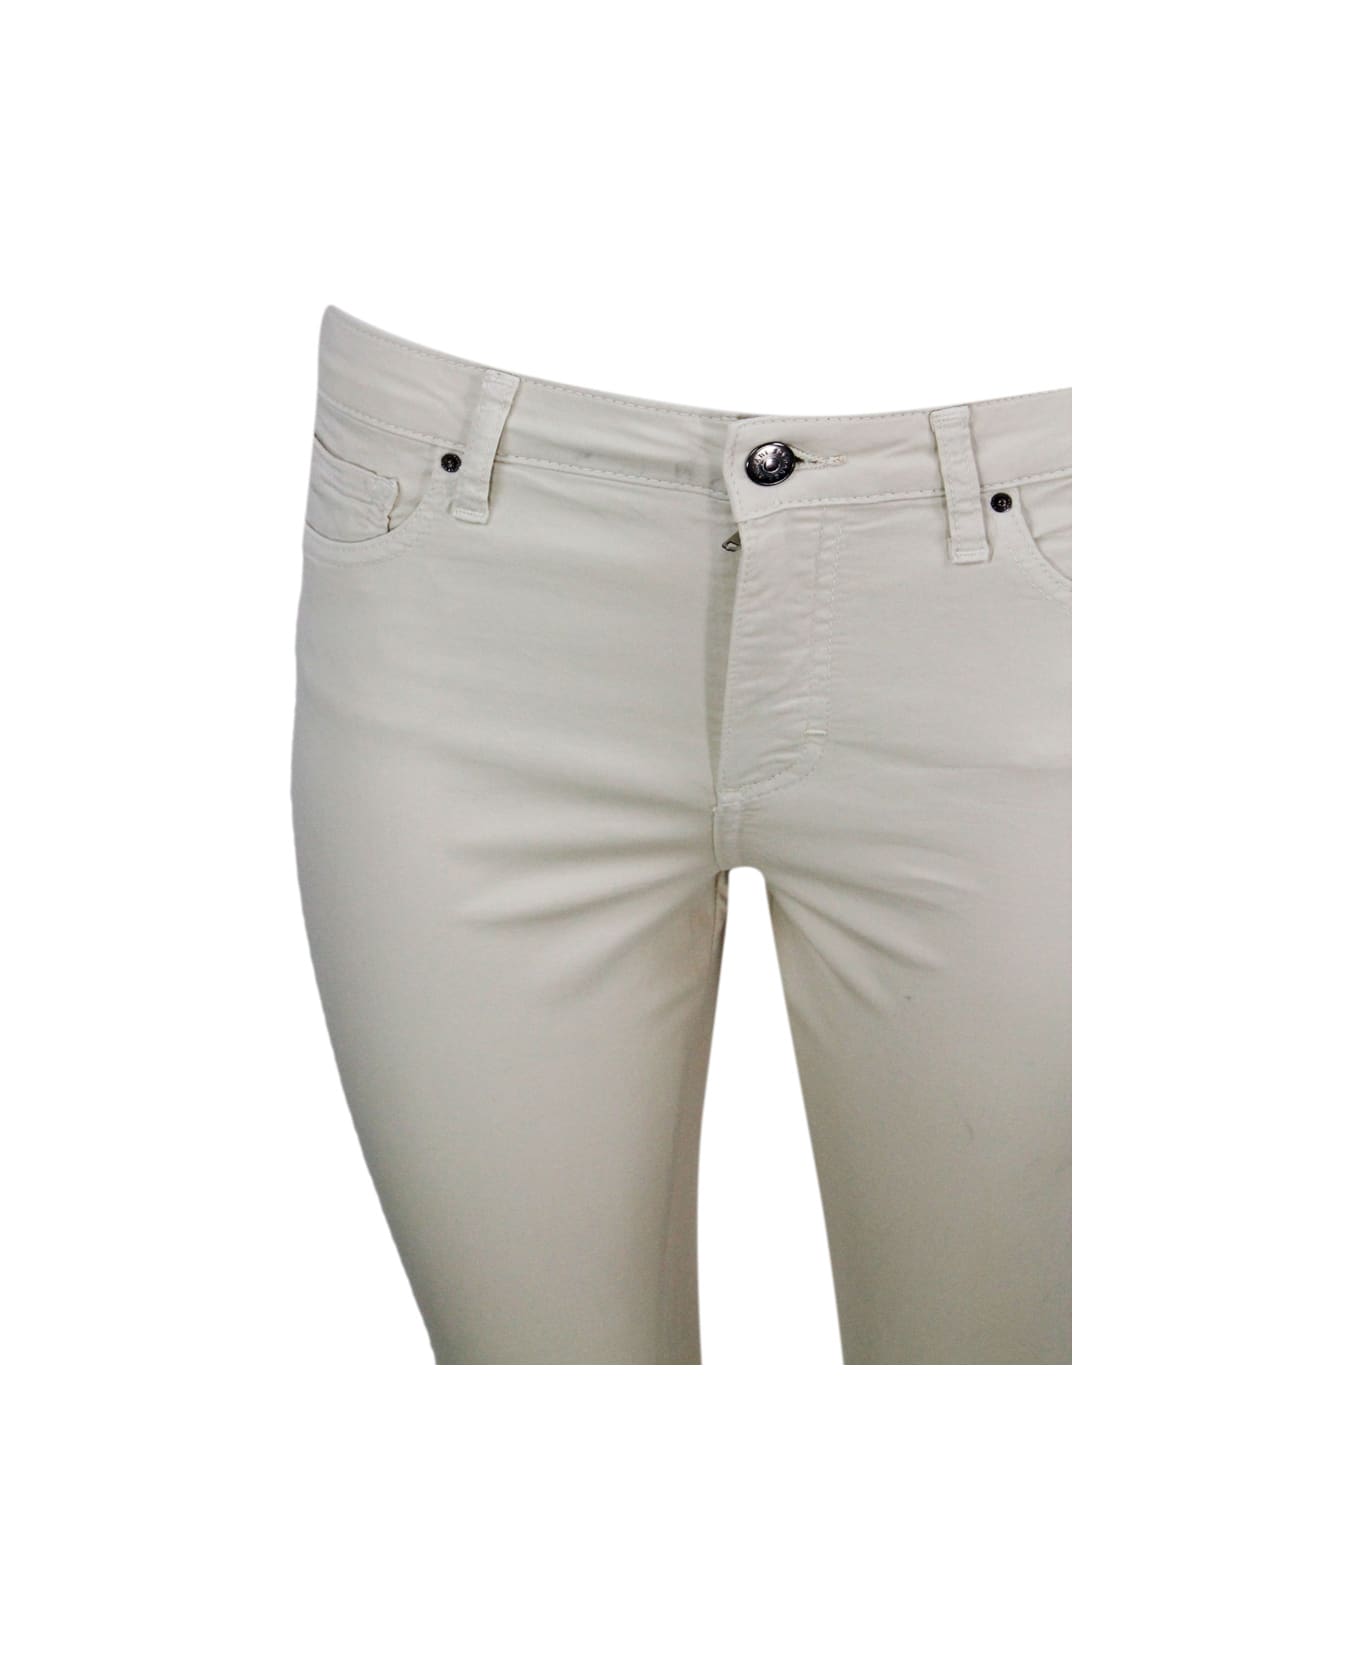 Armani Collezioni 5-pocket Trousers In Soft Stretch Cotton Super Skinny Capri. Zip And Button Closure. - Beige